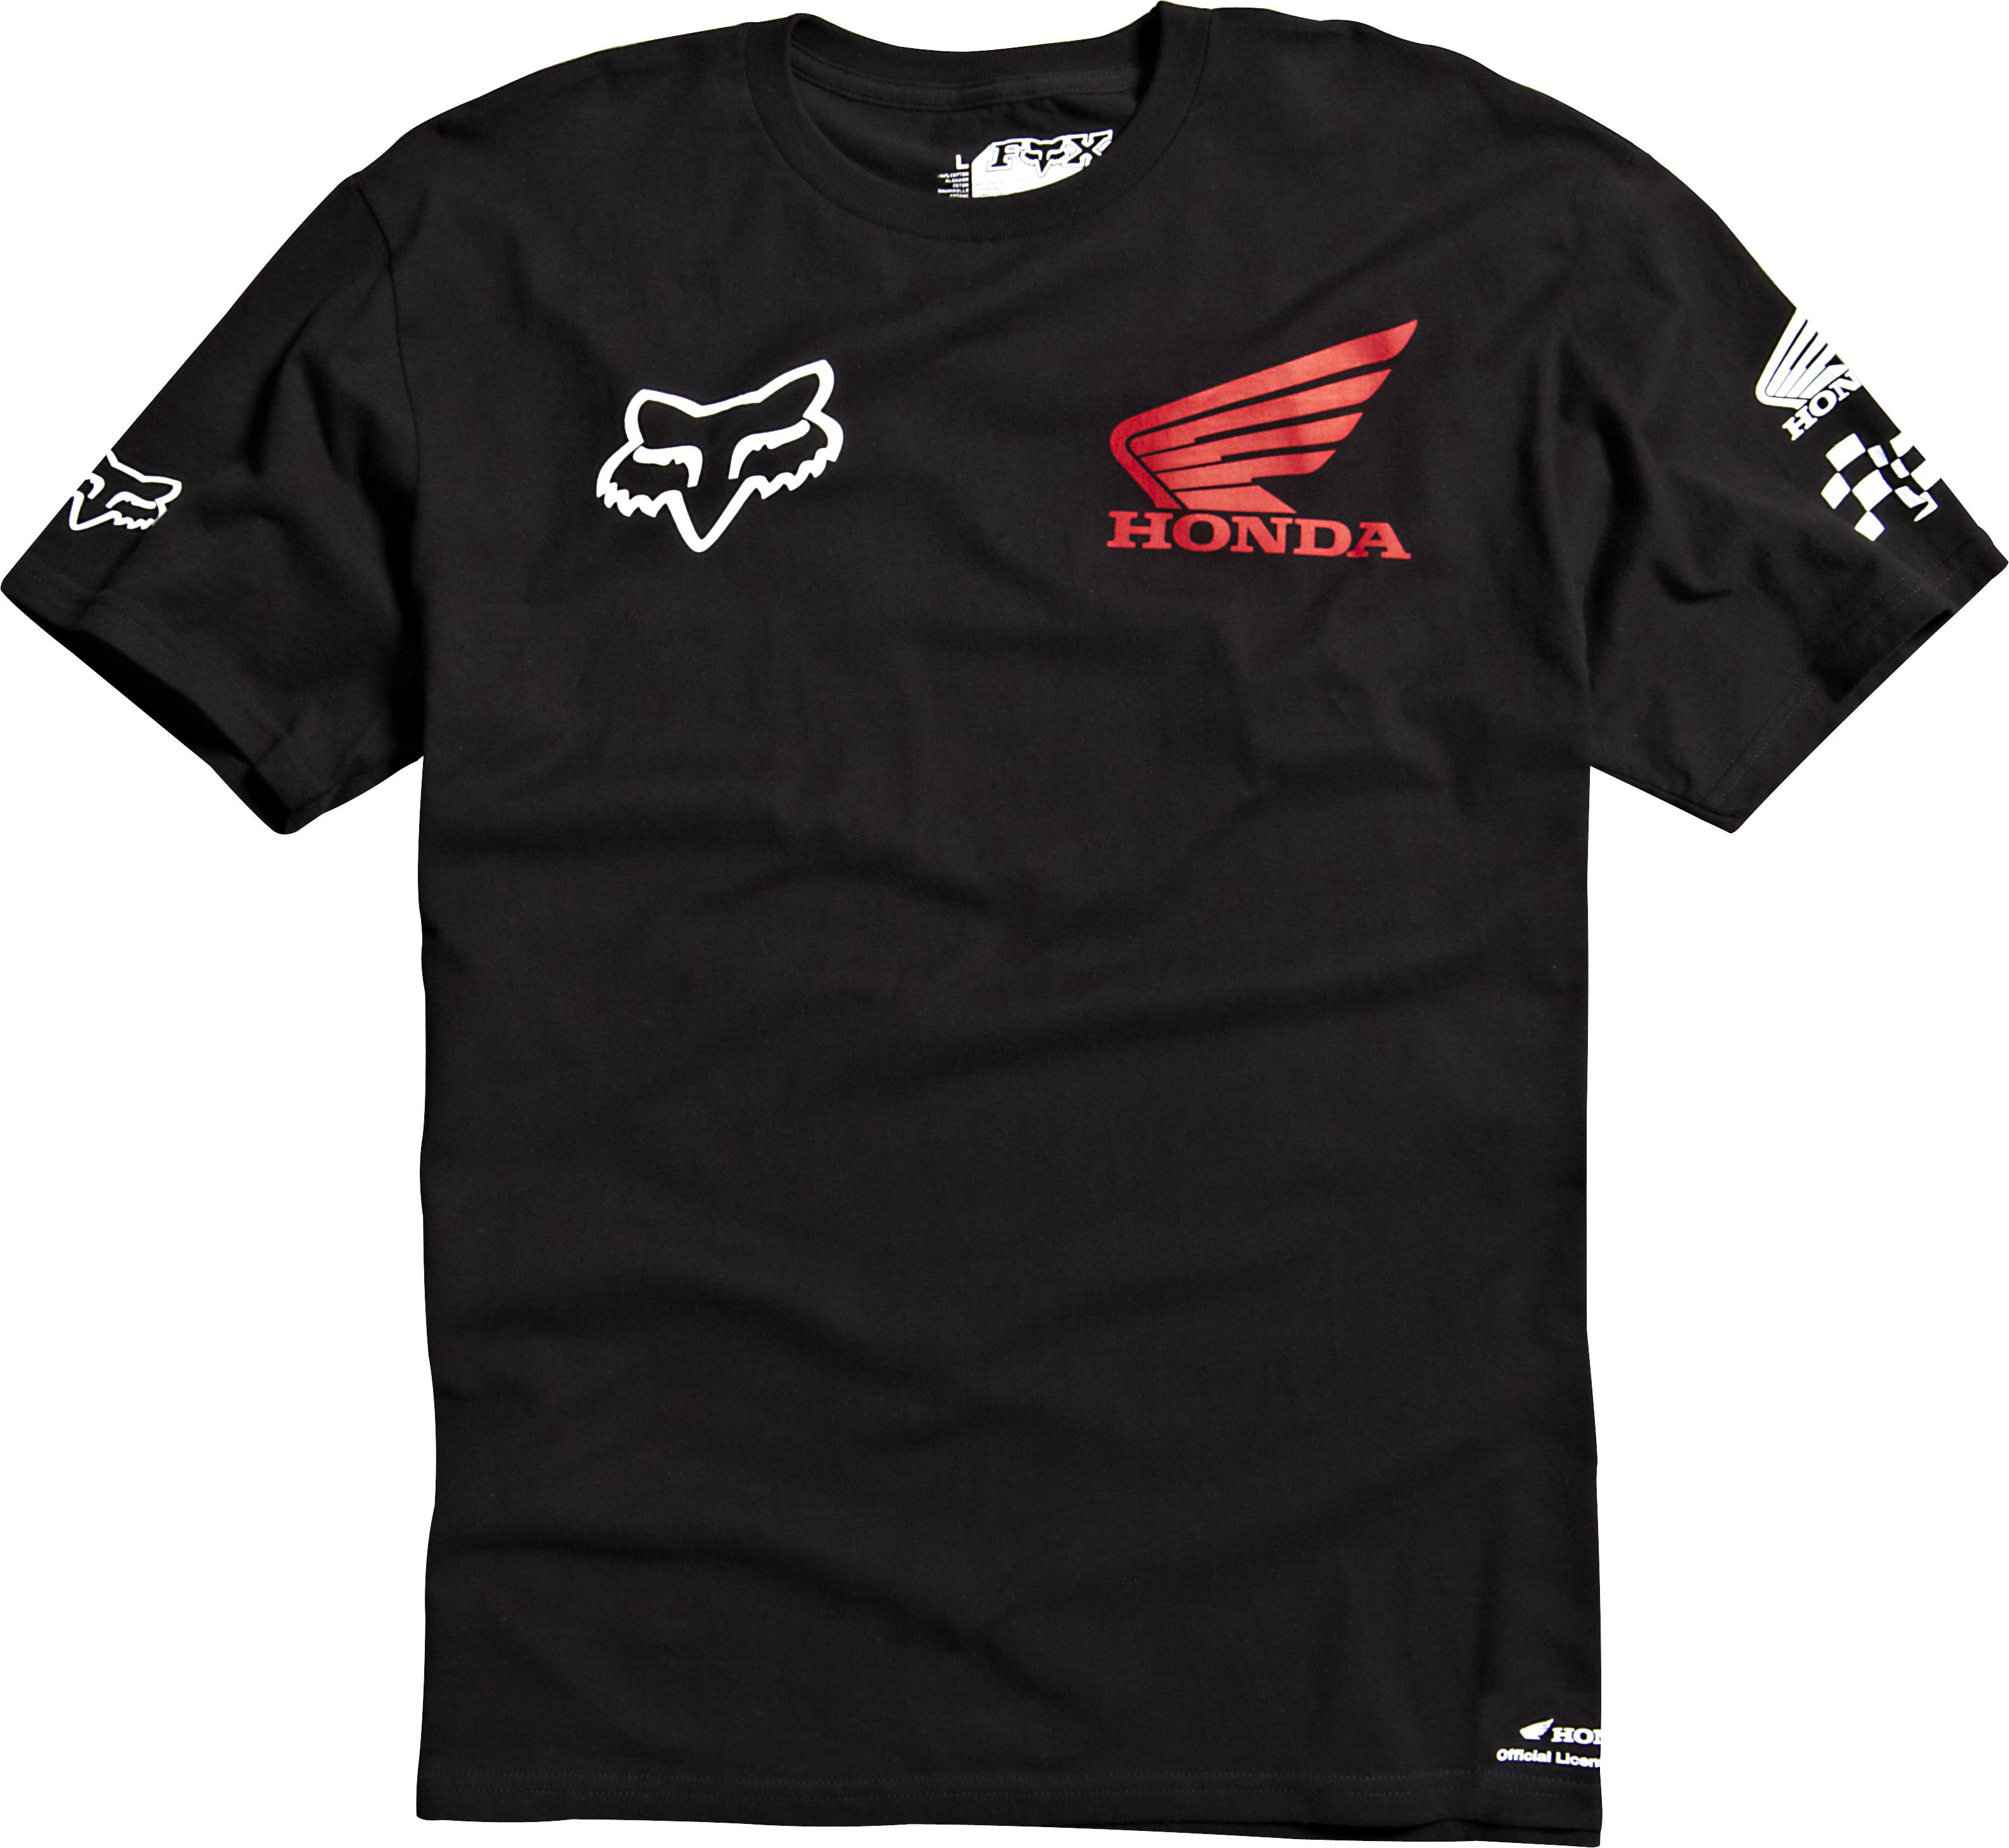 Fox racing honda basic t-shirt black tee shirt 2014